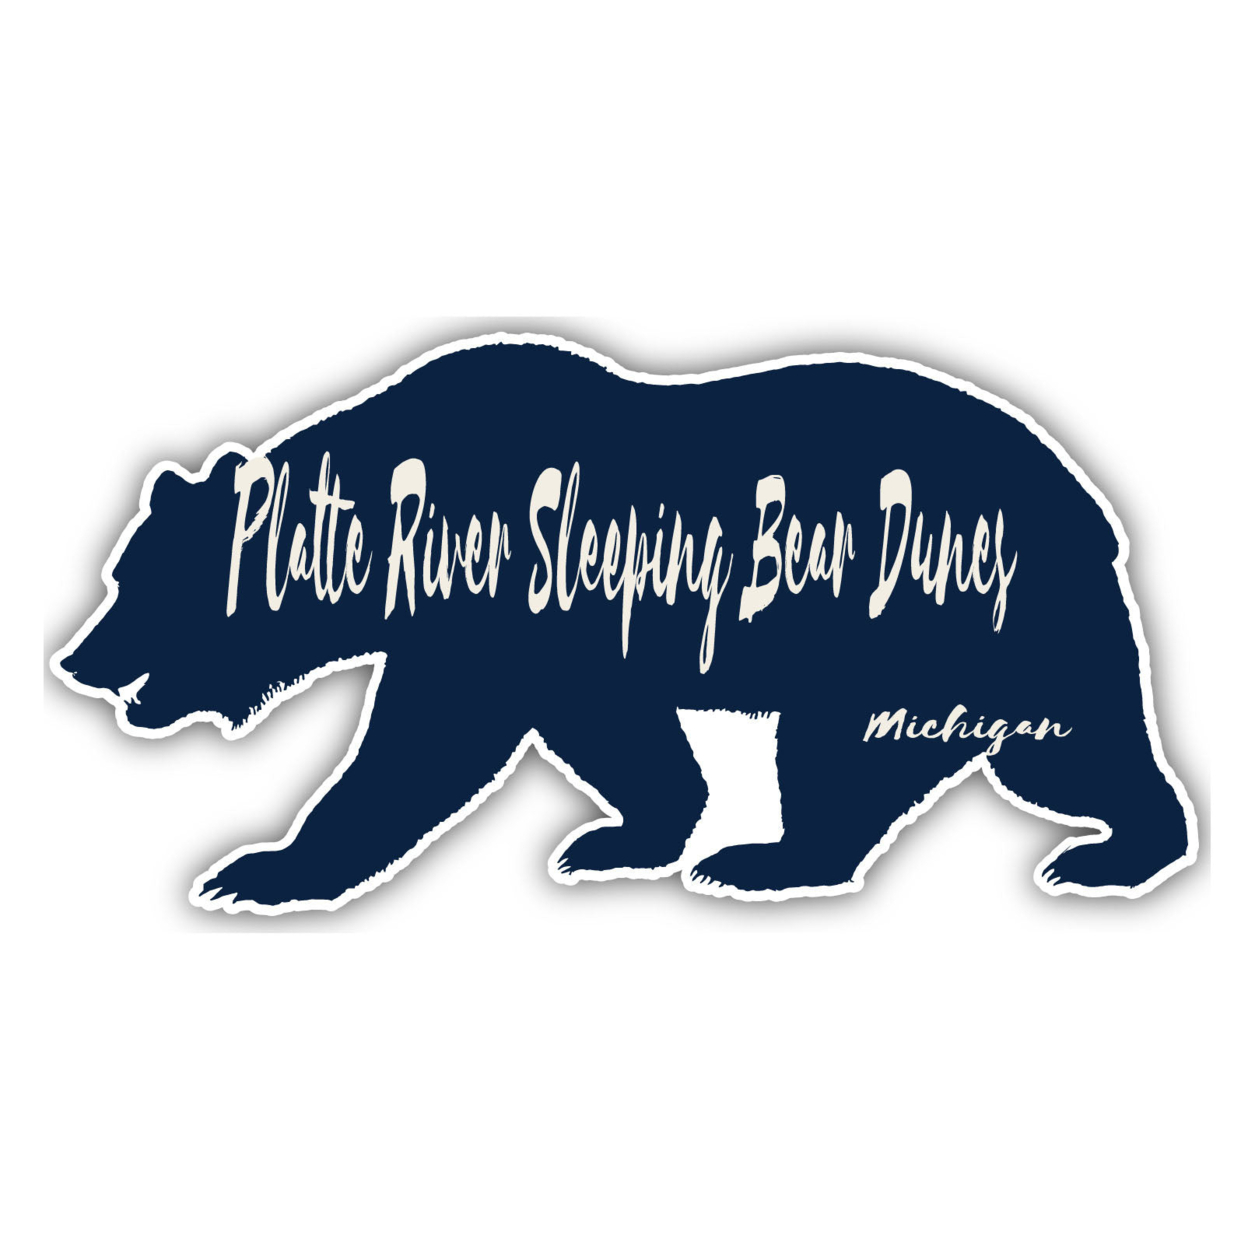 Platte River Sleeping Bear Dunes Michigan Souvenir Decorative Stickers (Choose Theme And Size) - Single Unit, 4-Inch, Bear